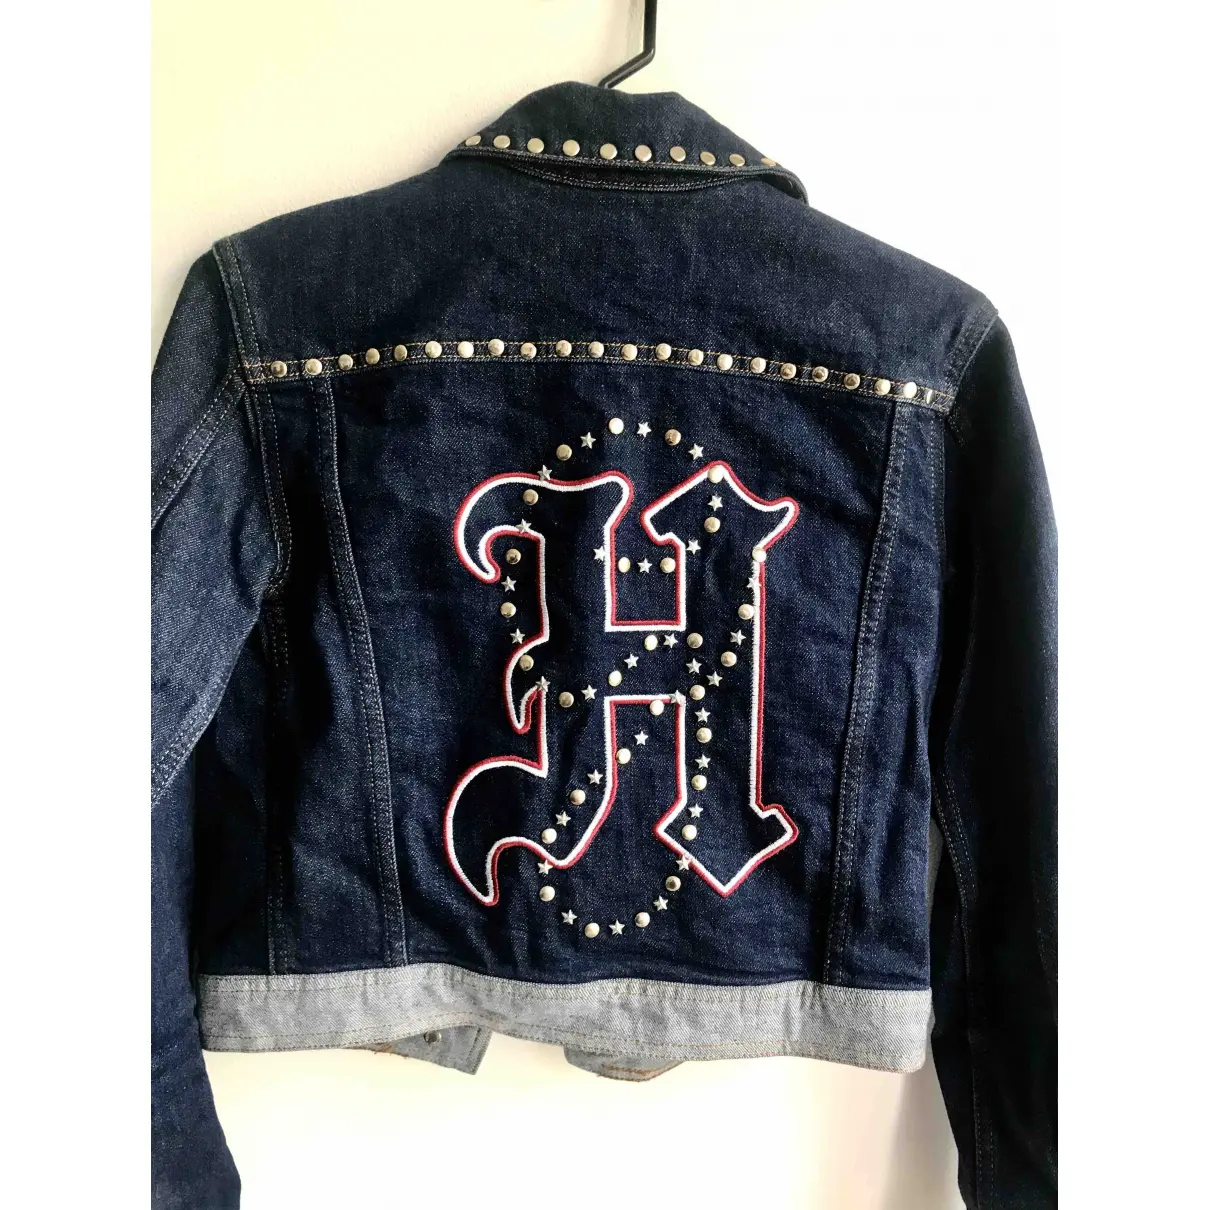 Buy Gigi Hadid x Tommy Hilfiger Jacket online